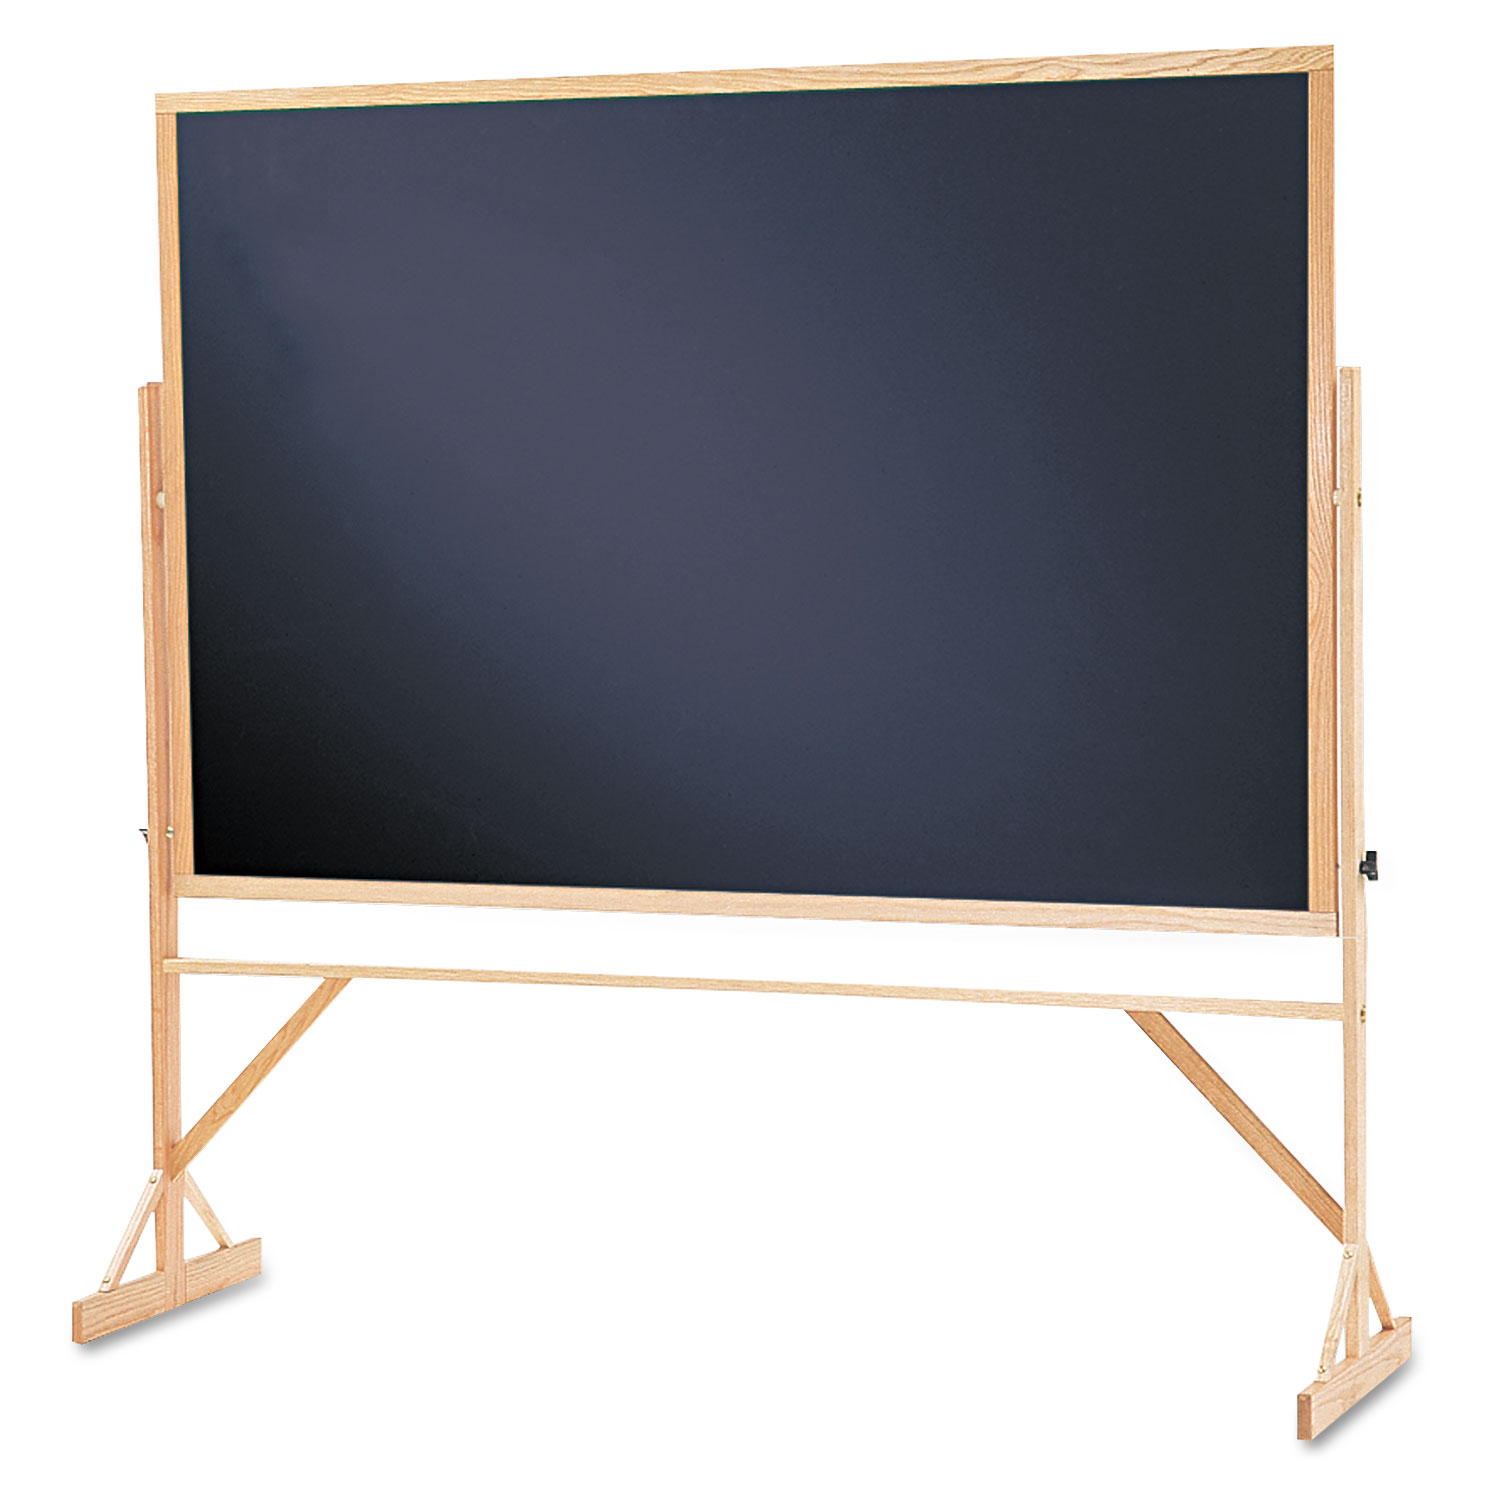  Quartet WTR406810 Reversible Chalkboard, 72 x 48, Black Surface, Oak Frame (QRTWTR406810) 